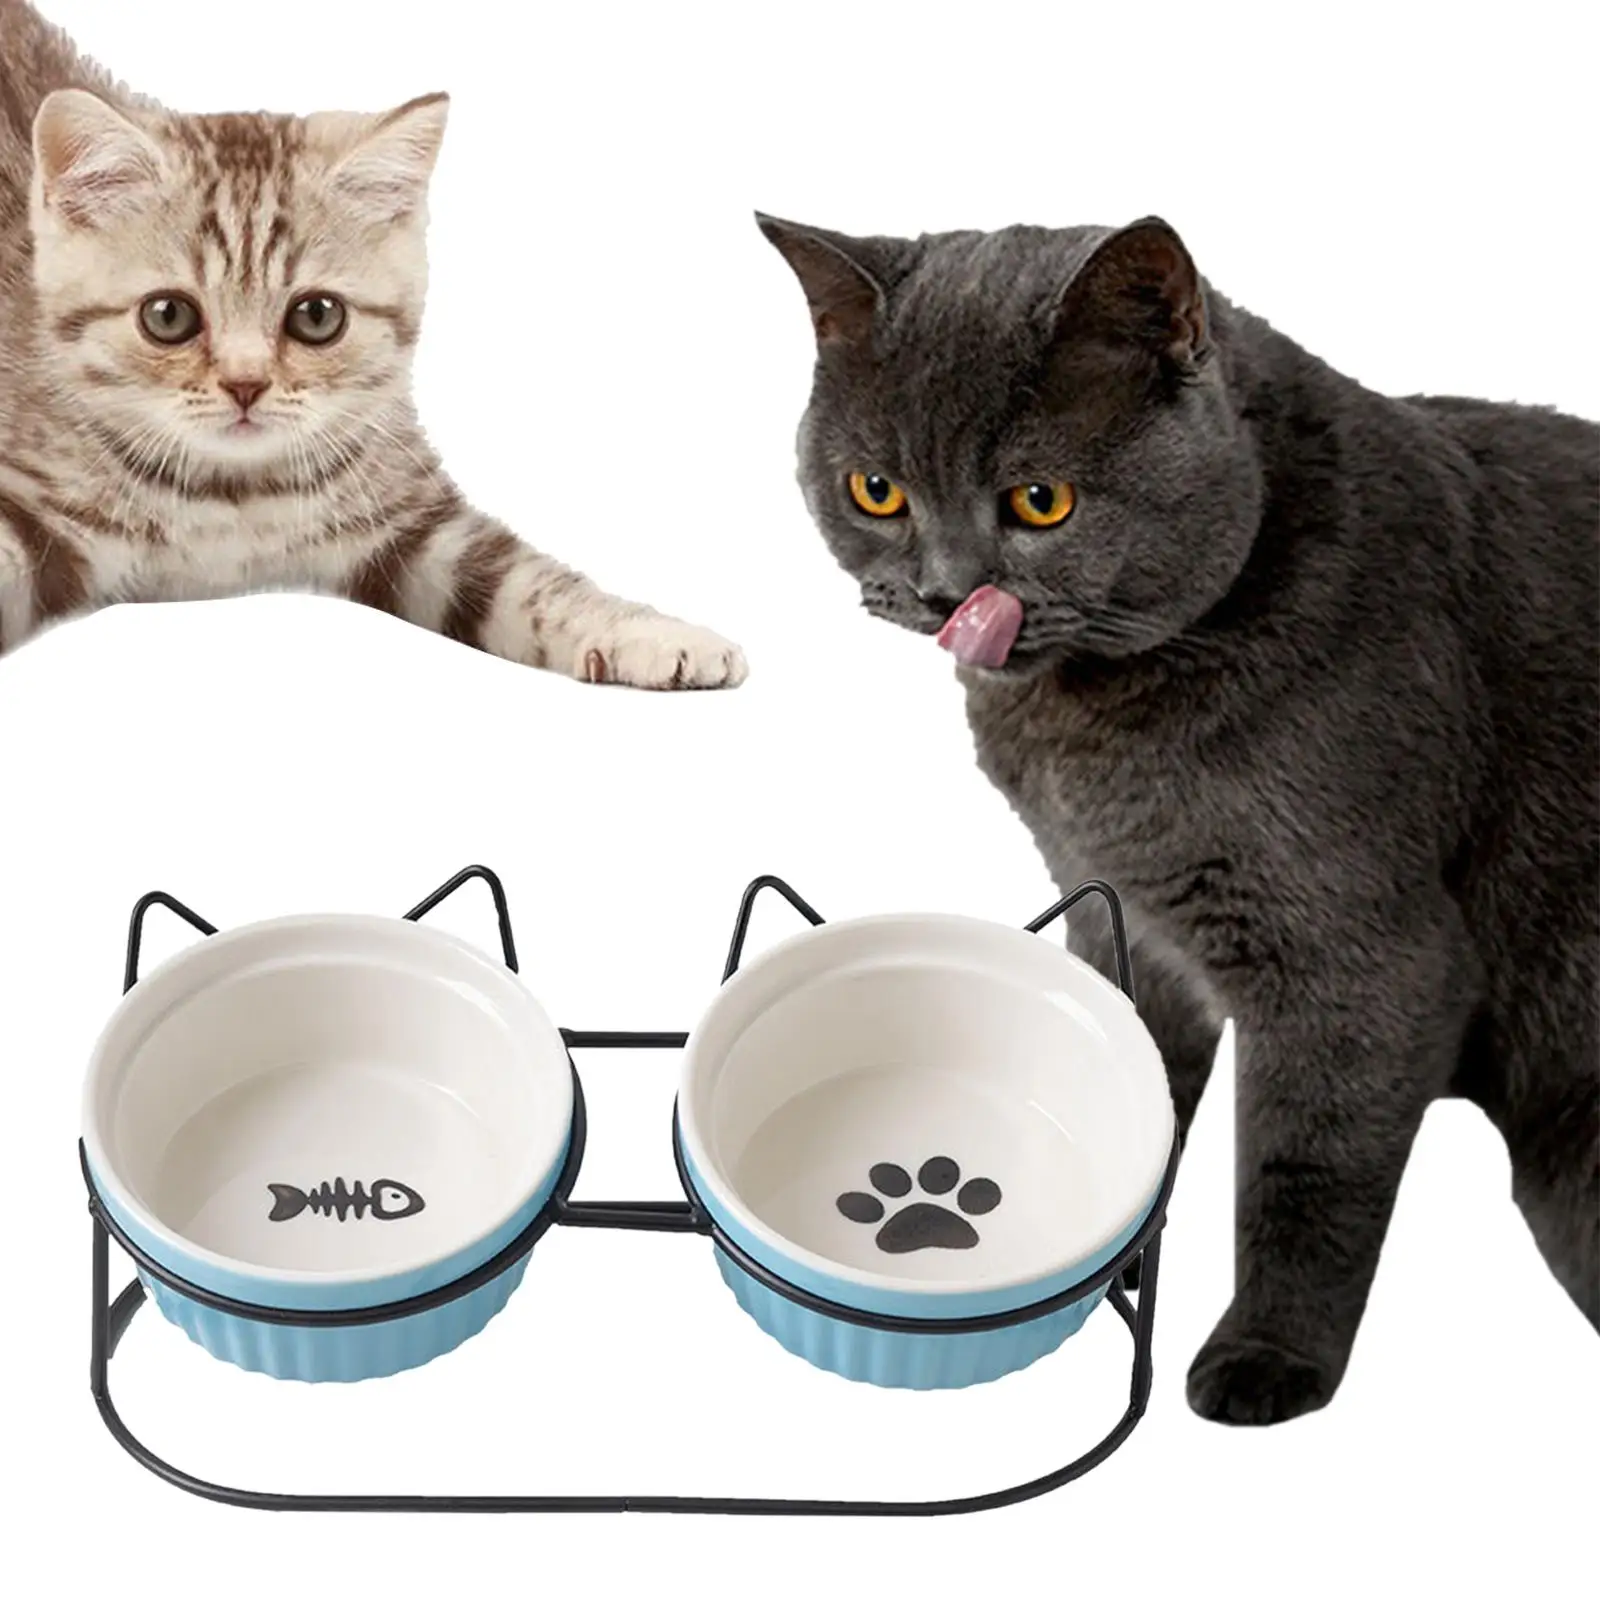 Non Slip Cat Bowls Raised Stand Tilted Cat Bowl Design for Raised Dog Bowl